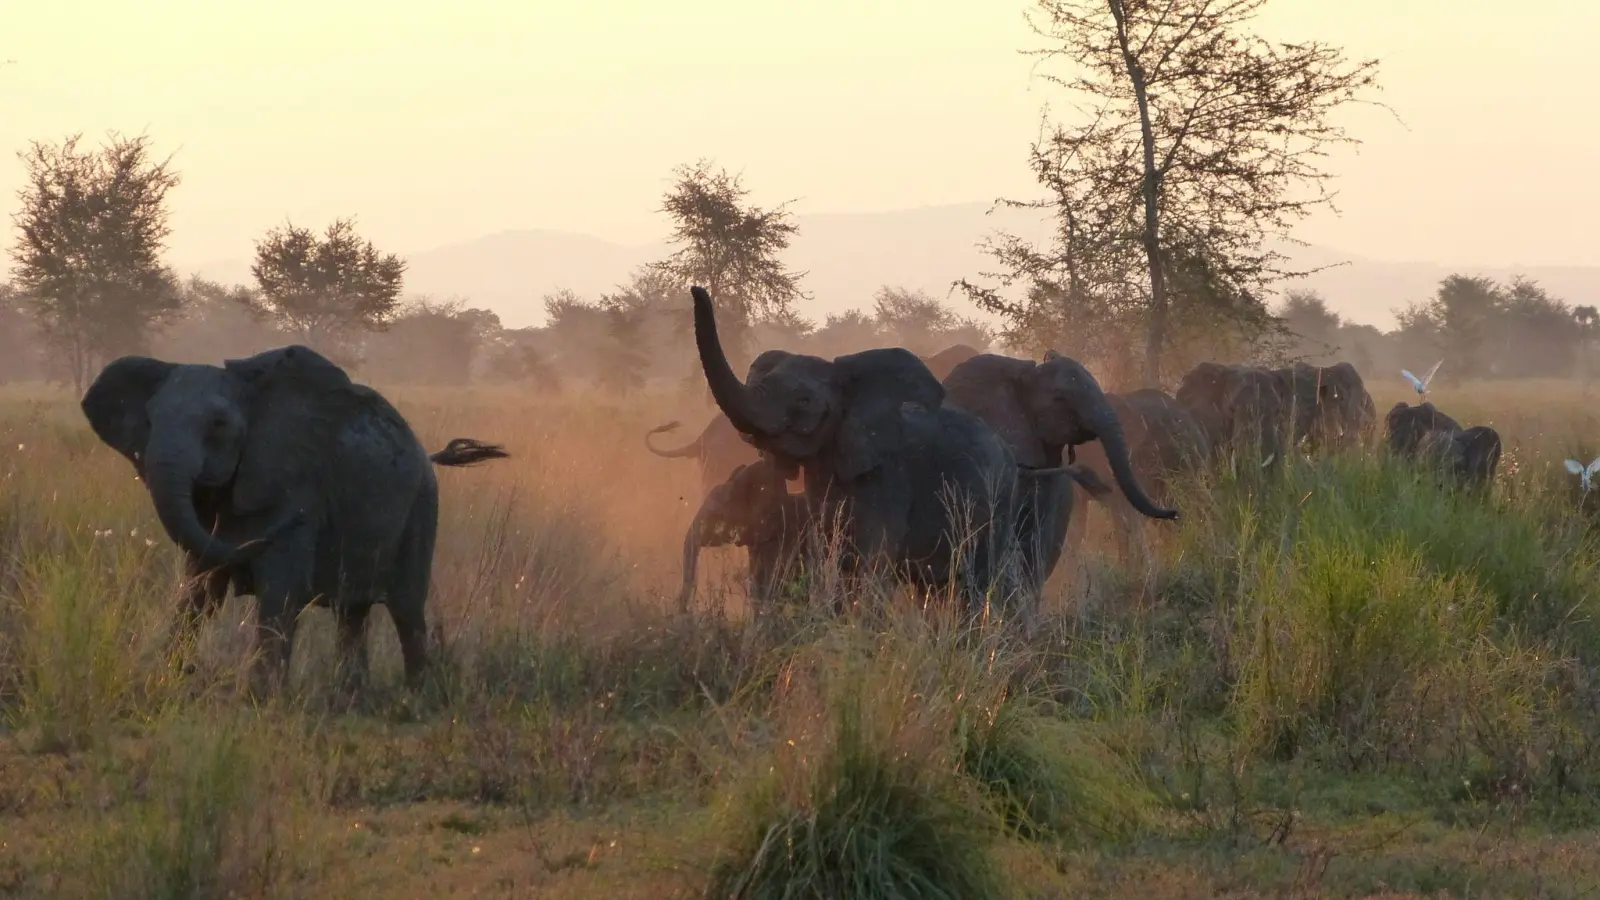 Mit etwas Glück begegnen Safaritouristen im Gorongosa-Nationalpark Elefanten in freier Wildbahn. (Foto: Florian Sanktjohanser/dpa-tmn/Archivbild)